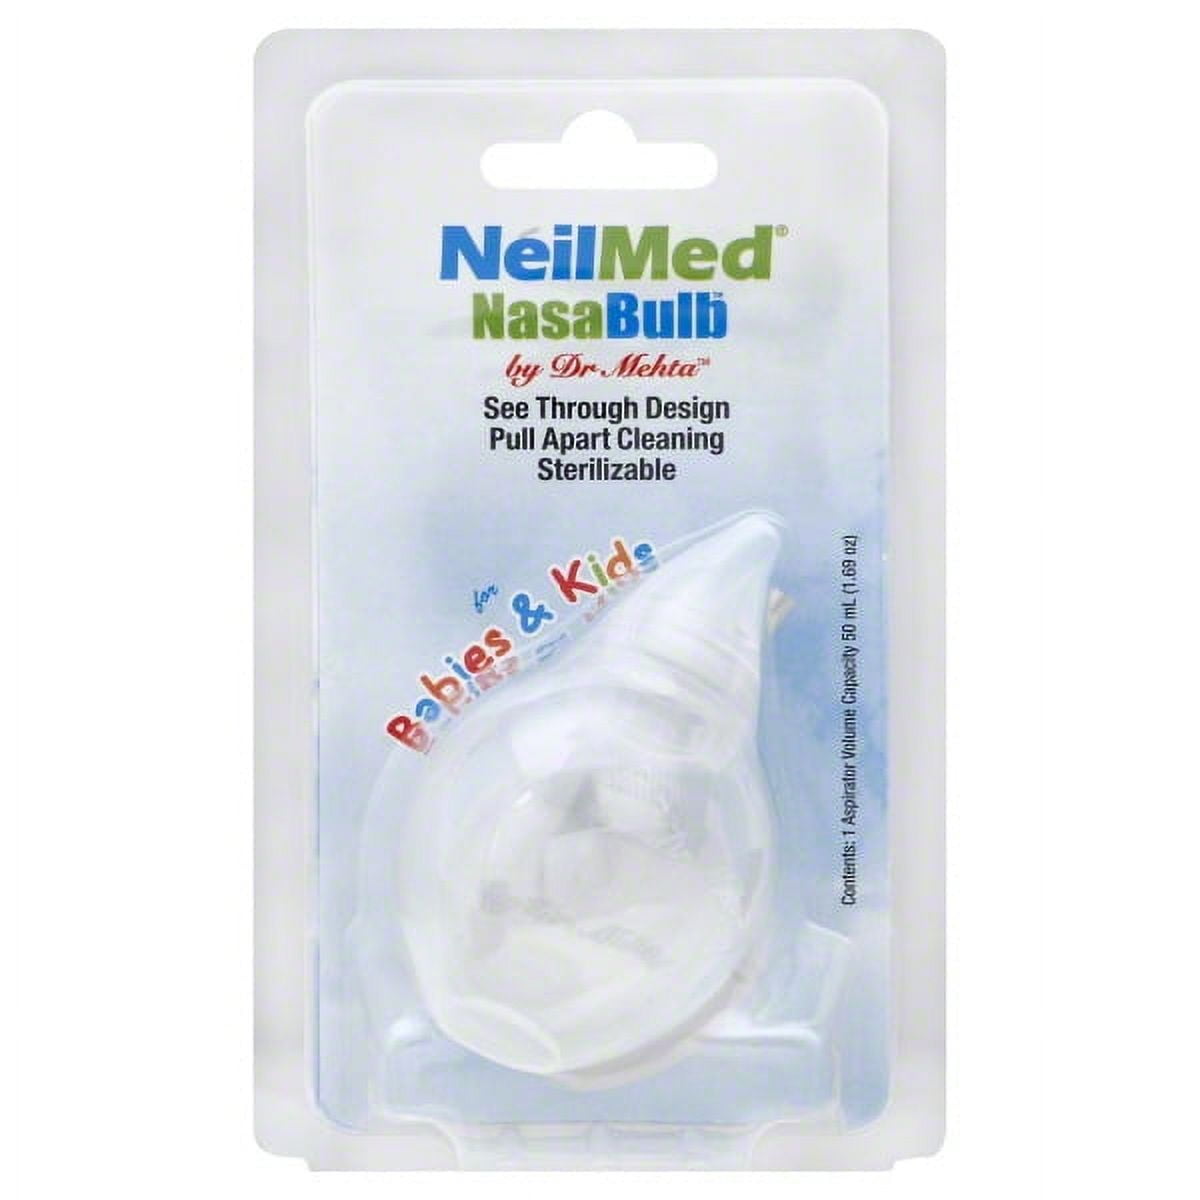 NeilMed, Babies & Kids, NasaBulb, Nasal Aspirator, 2 Aspirators, 1.69 oz  (50 ml) Each